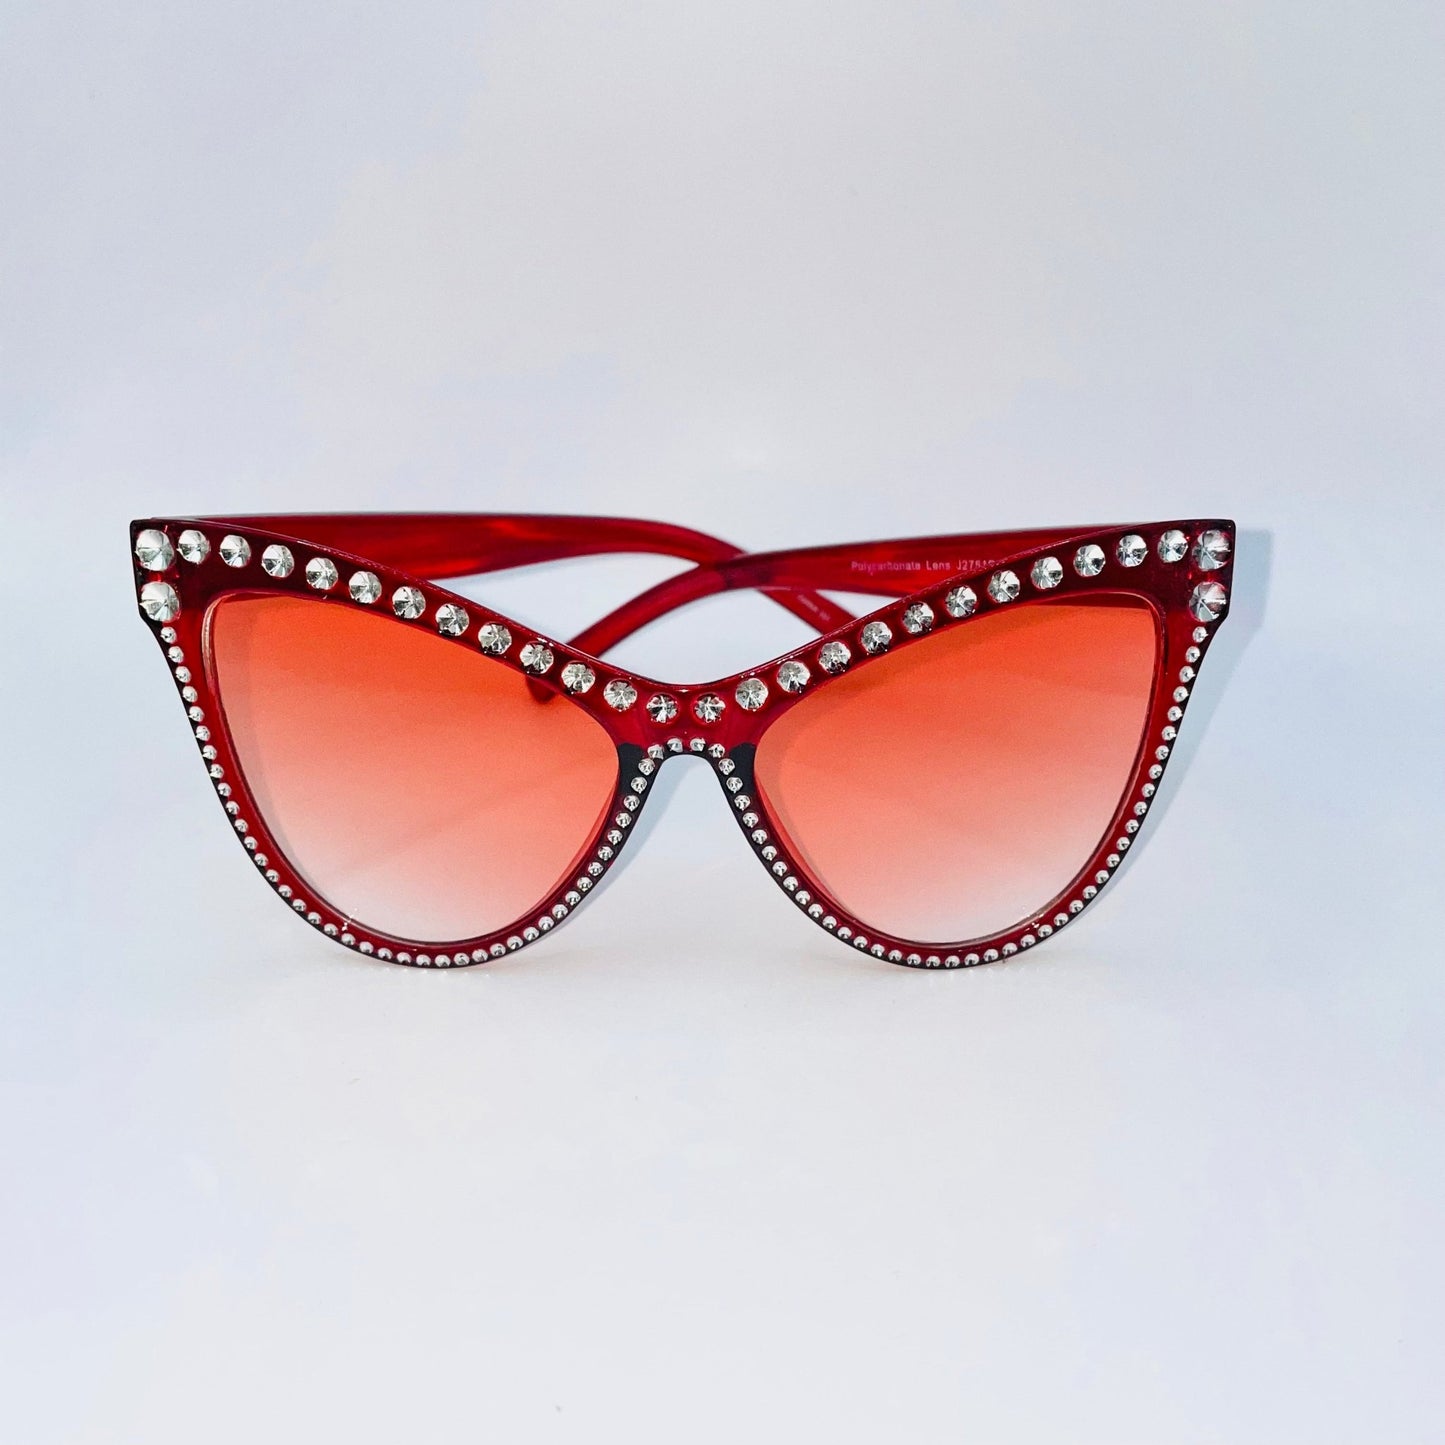 SHUN Glasses (Variety Of Sunglasses) - House of FaSHUN by Shun Melson